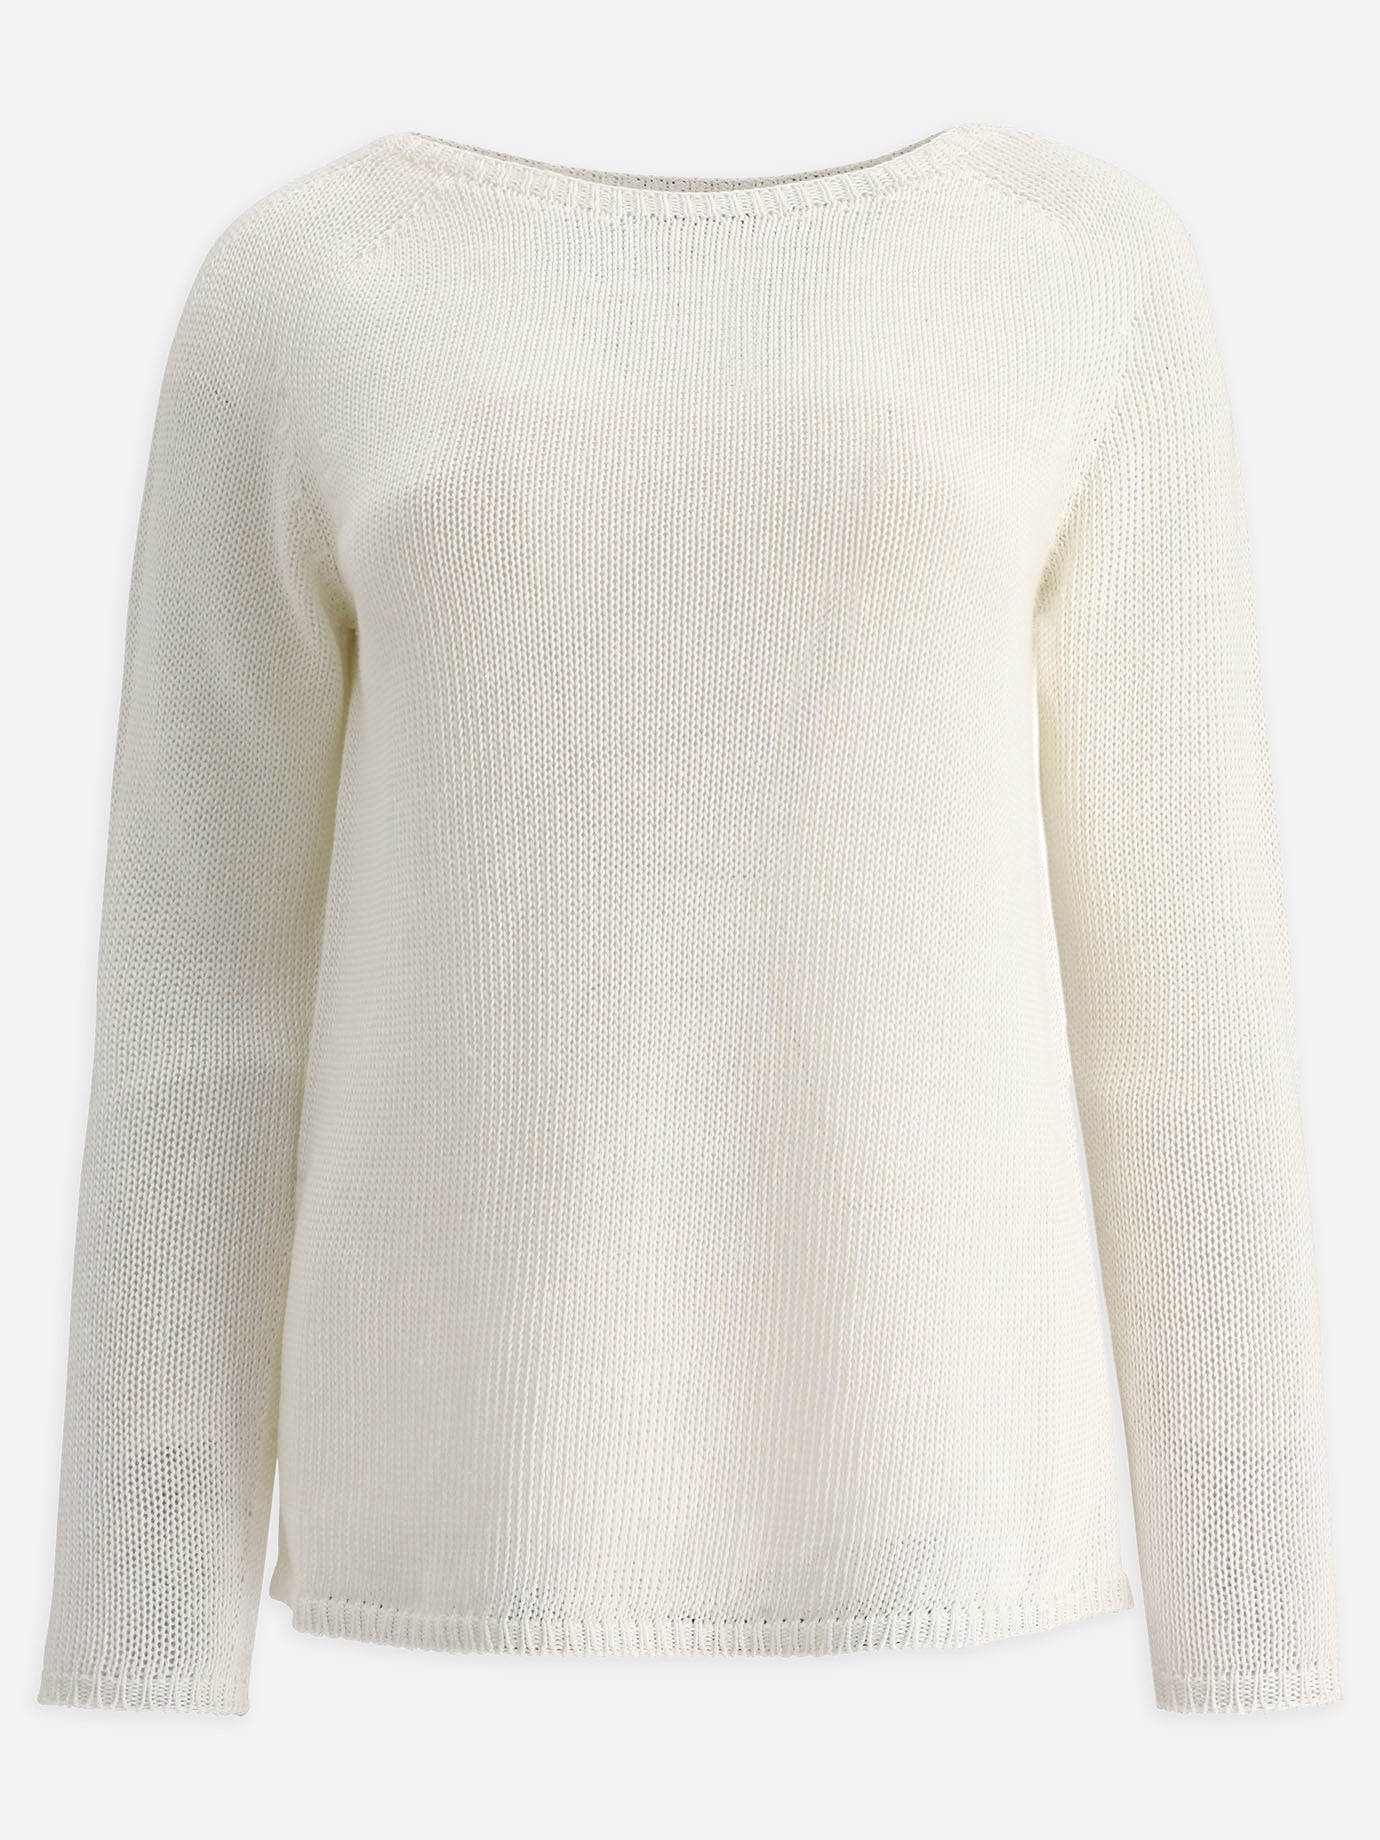 "Giolino" sweater